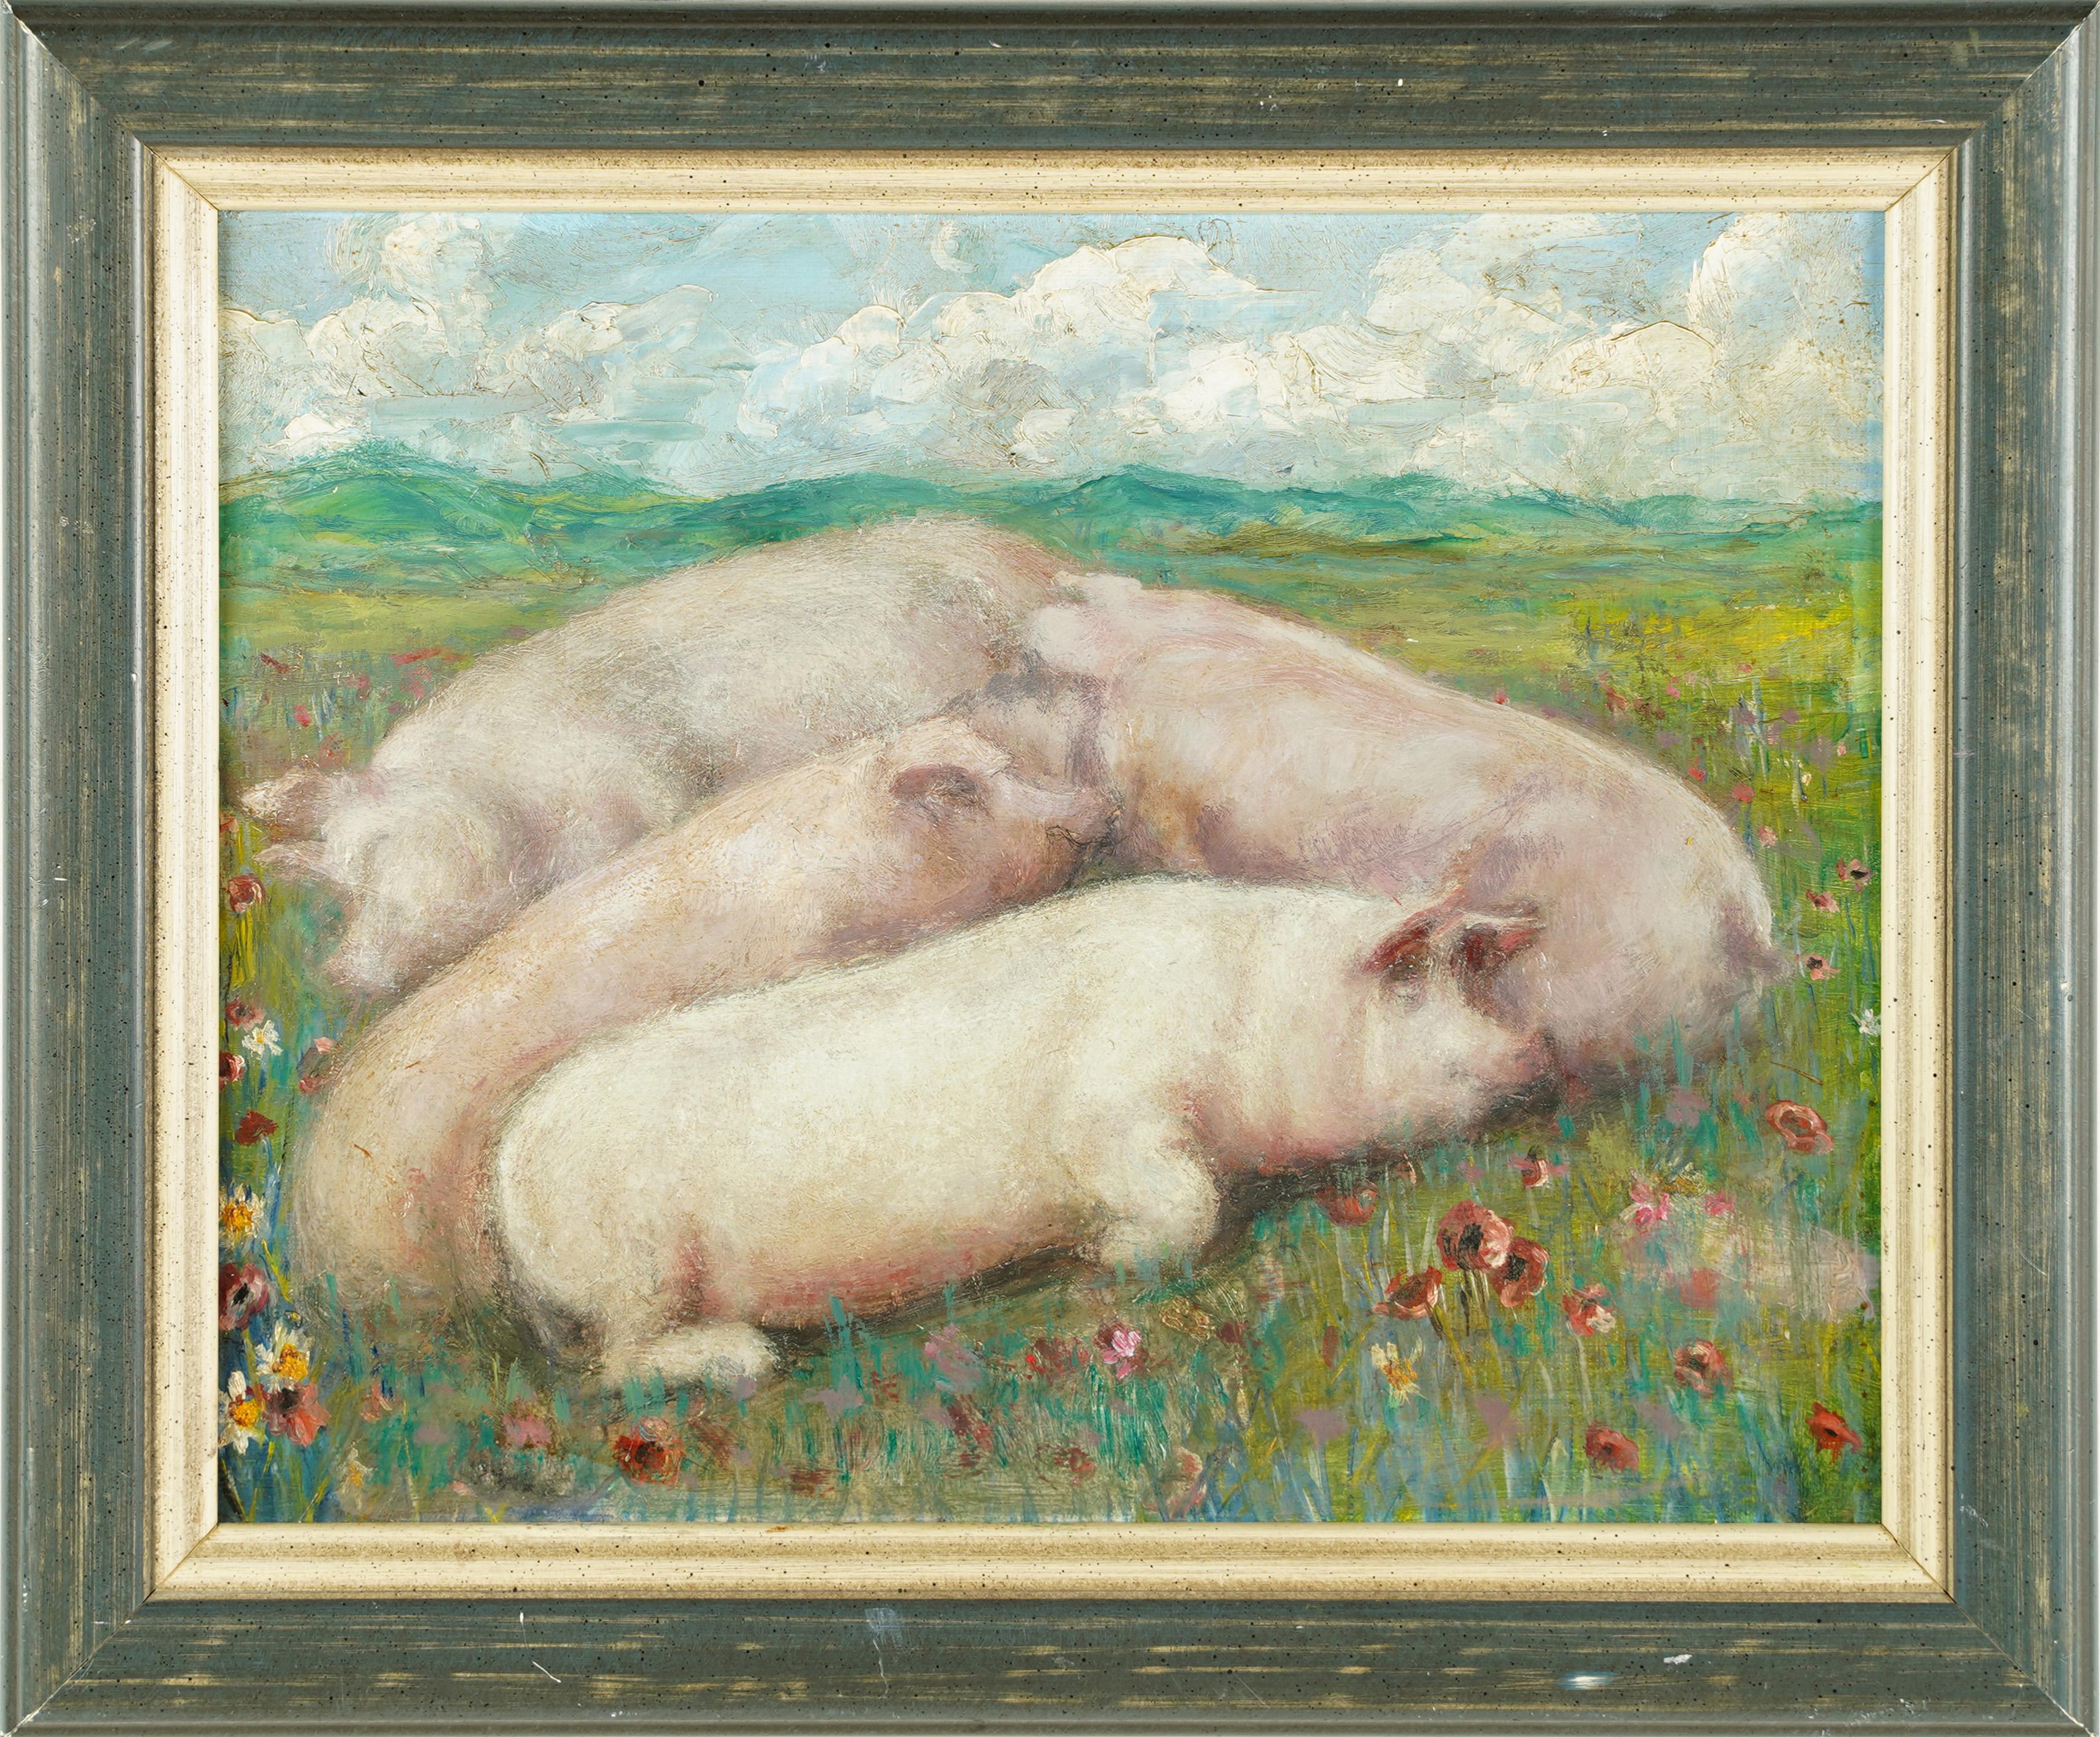  Antique American School Signed Framed Modernist Pig Farm Animal Oil Painting